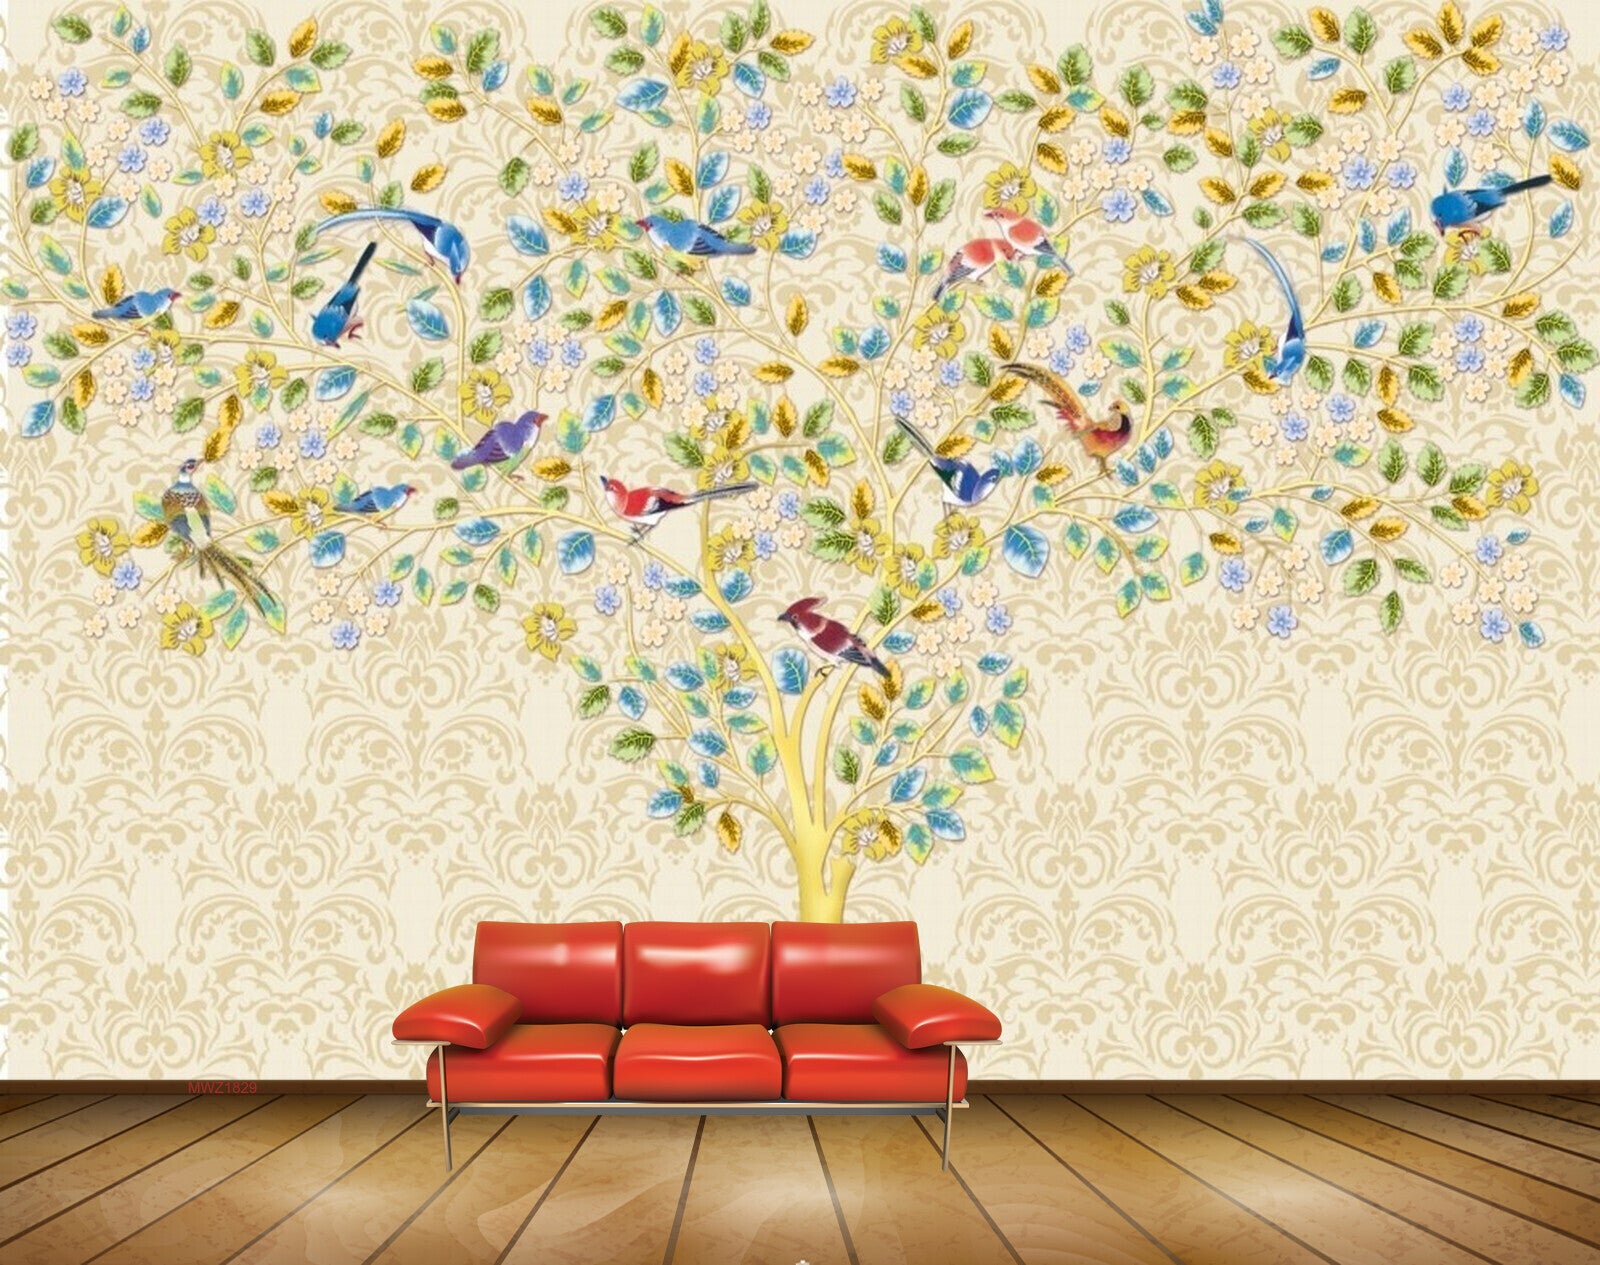 Avikalp MWZ1829 Tree Birds Leaves 3D HD Wallpaper